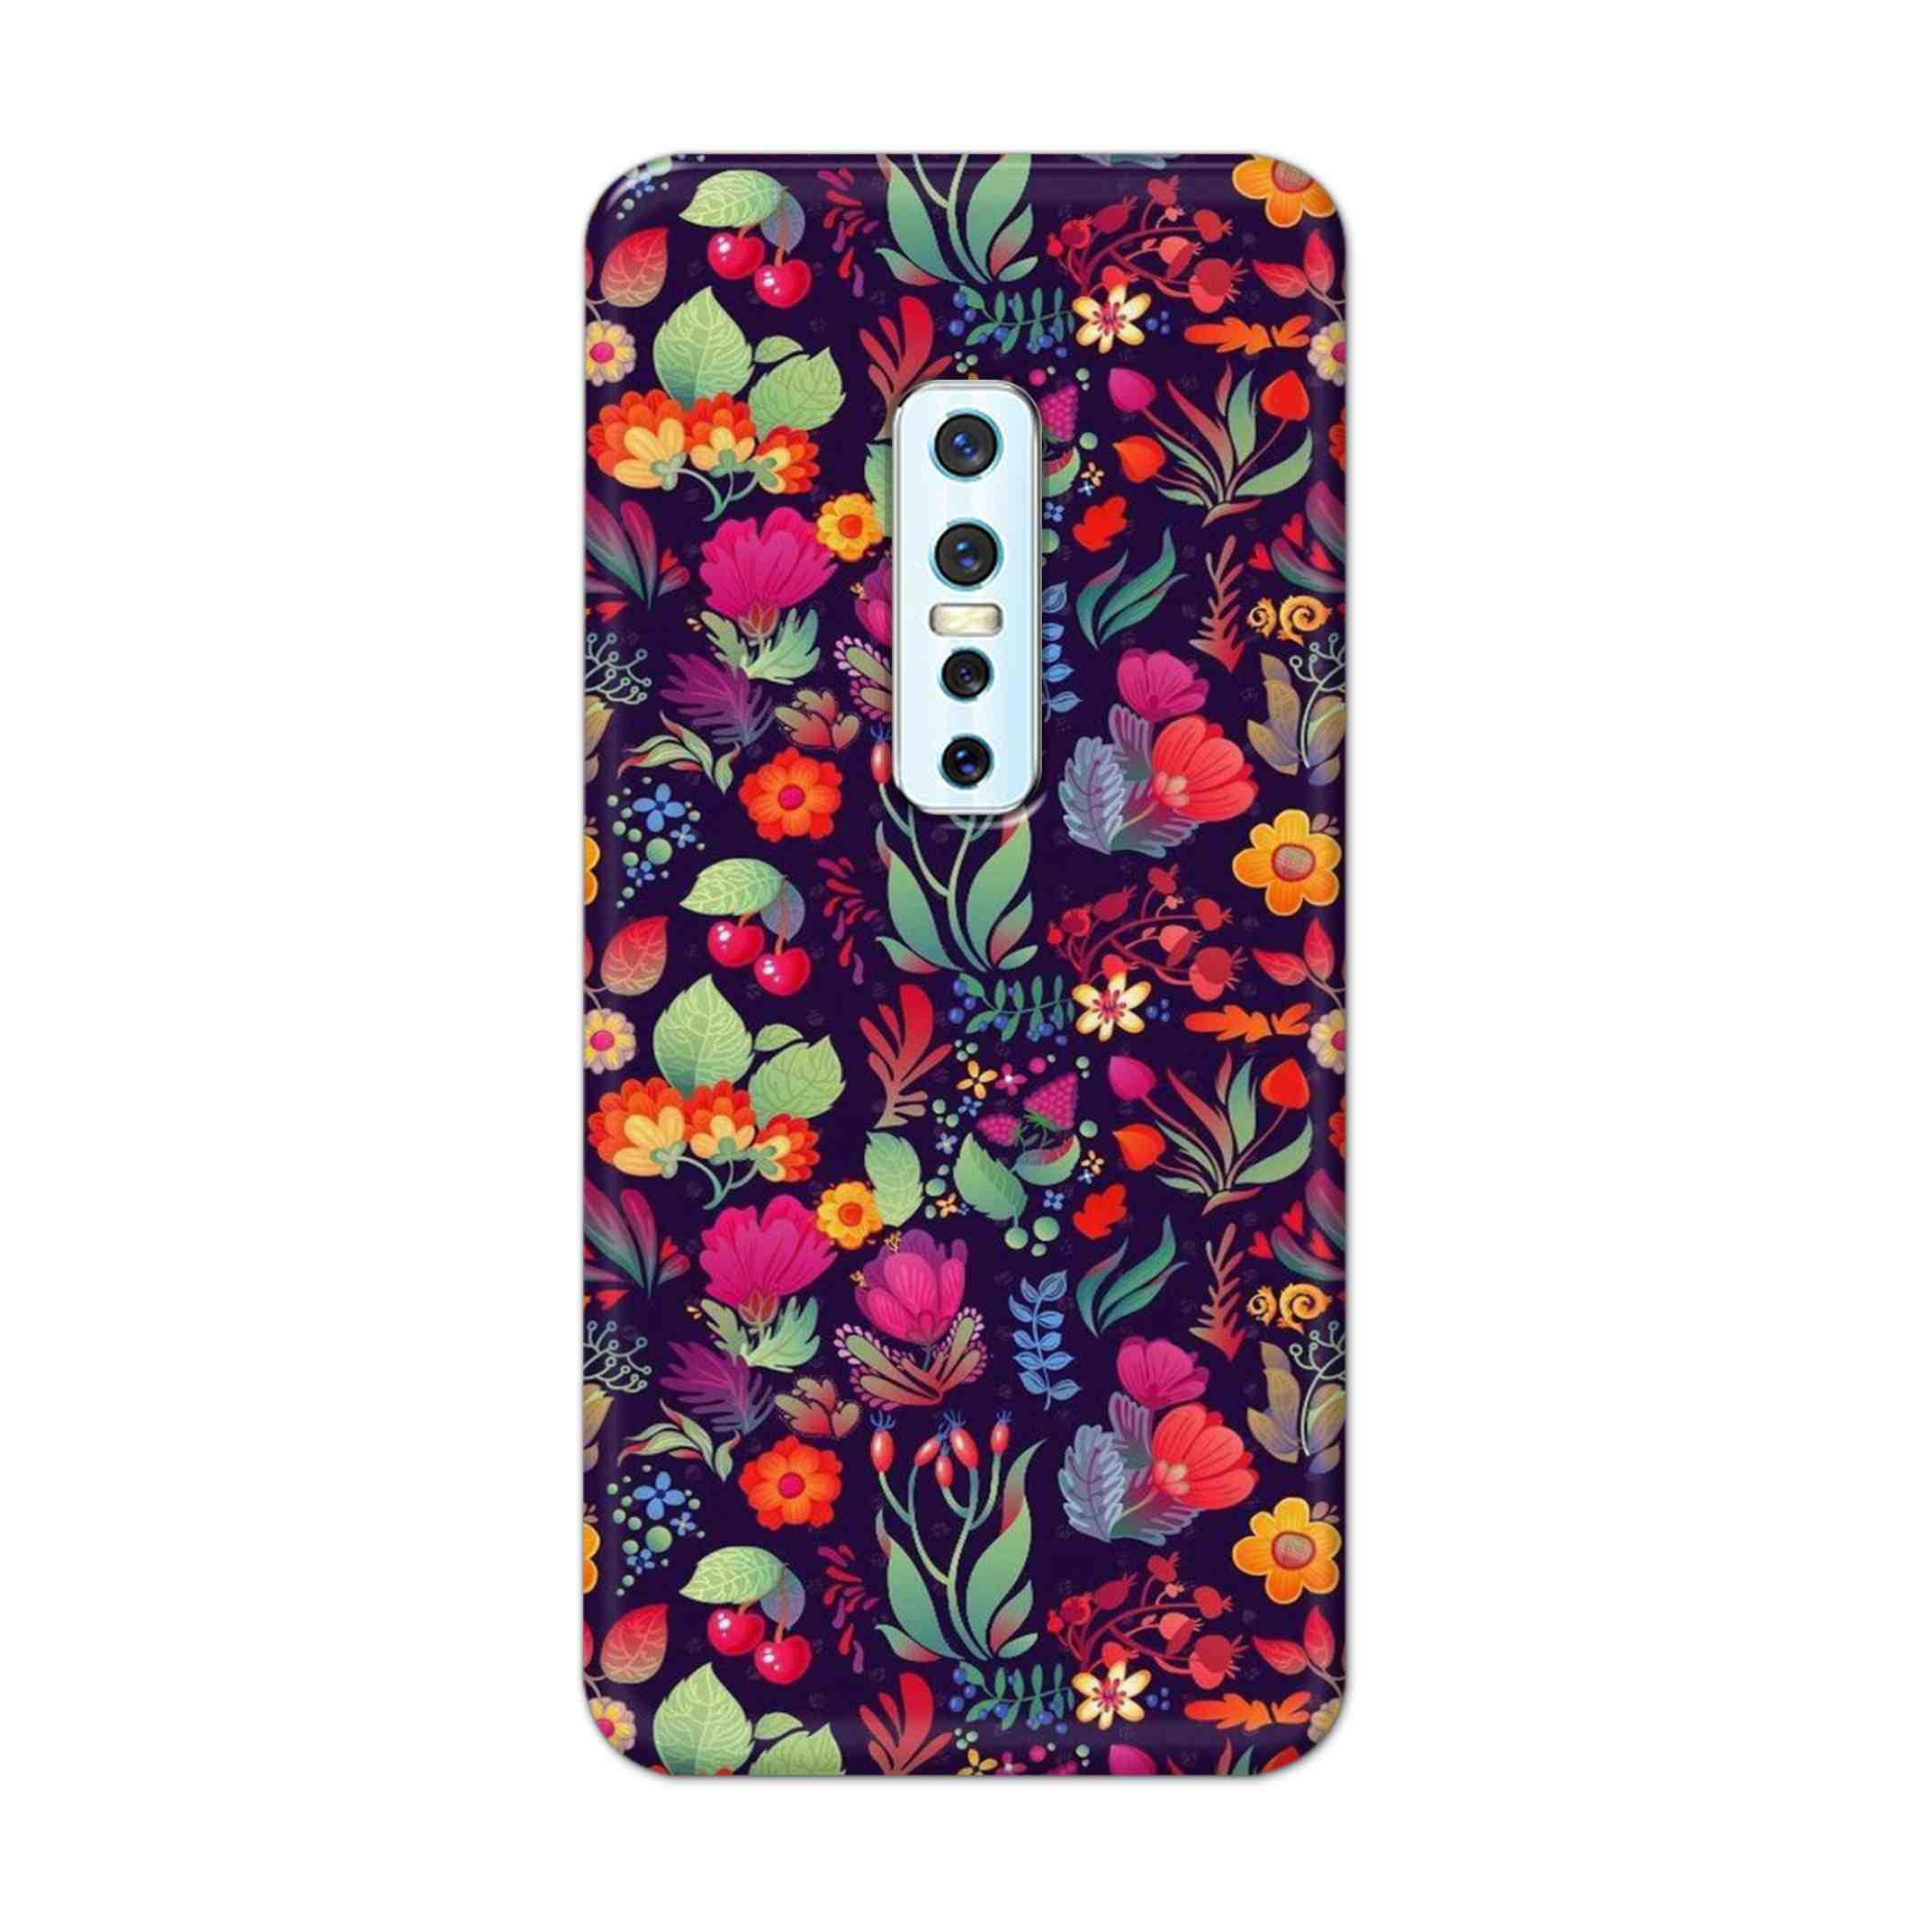 Buy Fruits Flower Hard Back Mobile Phone Case Cover For Vivo V17 Pro Online